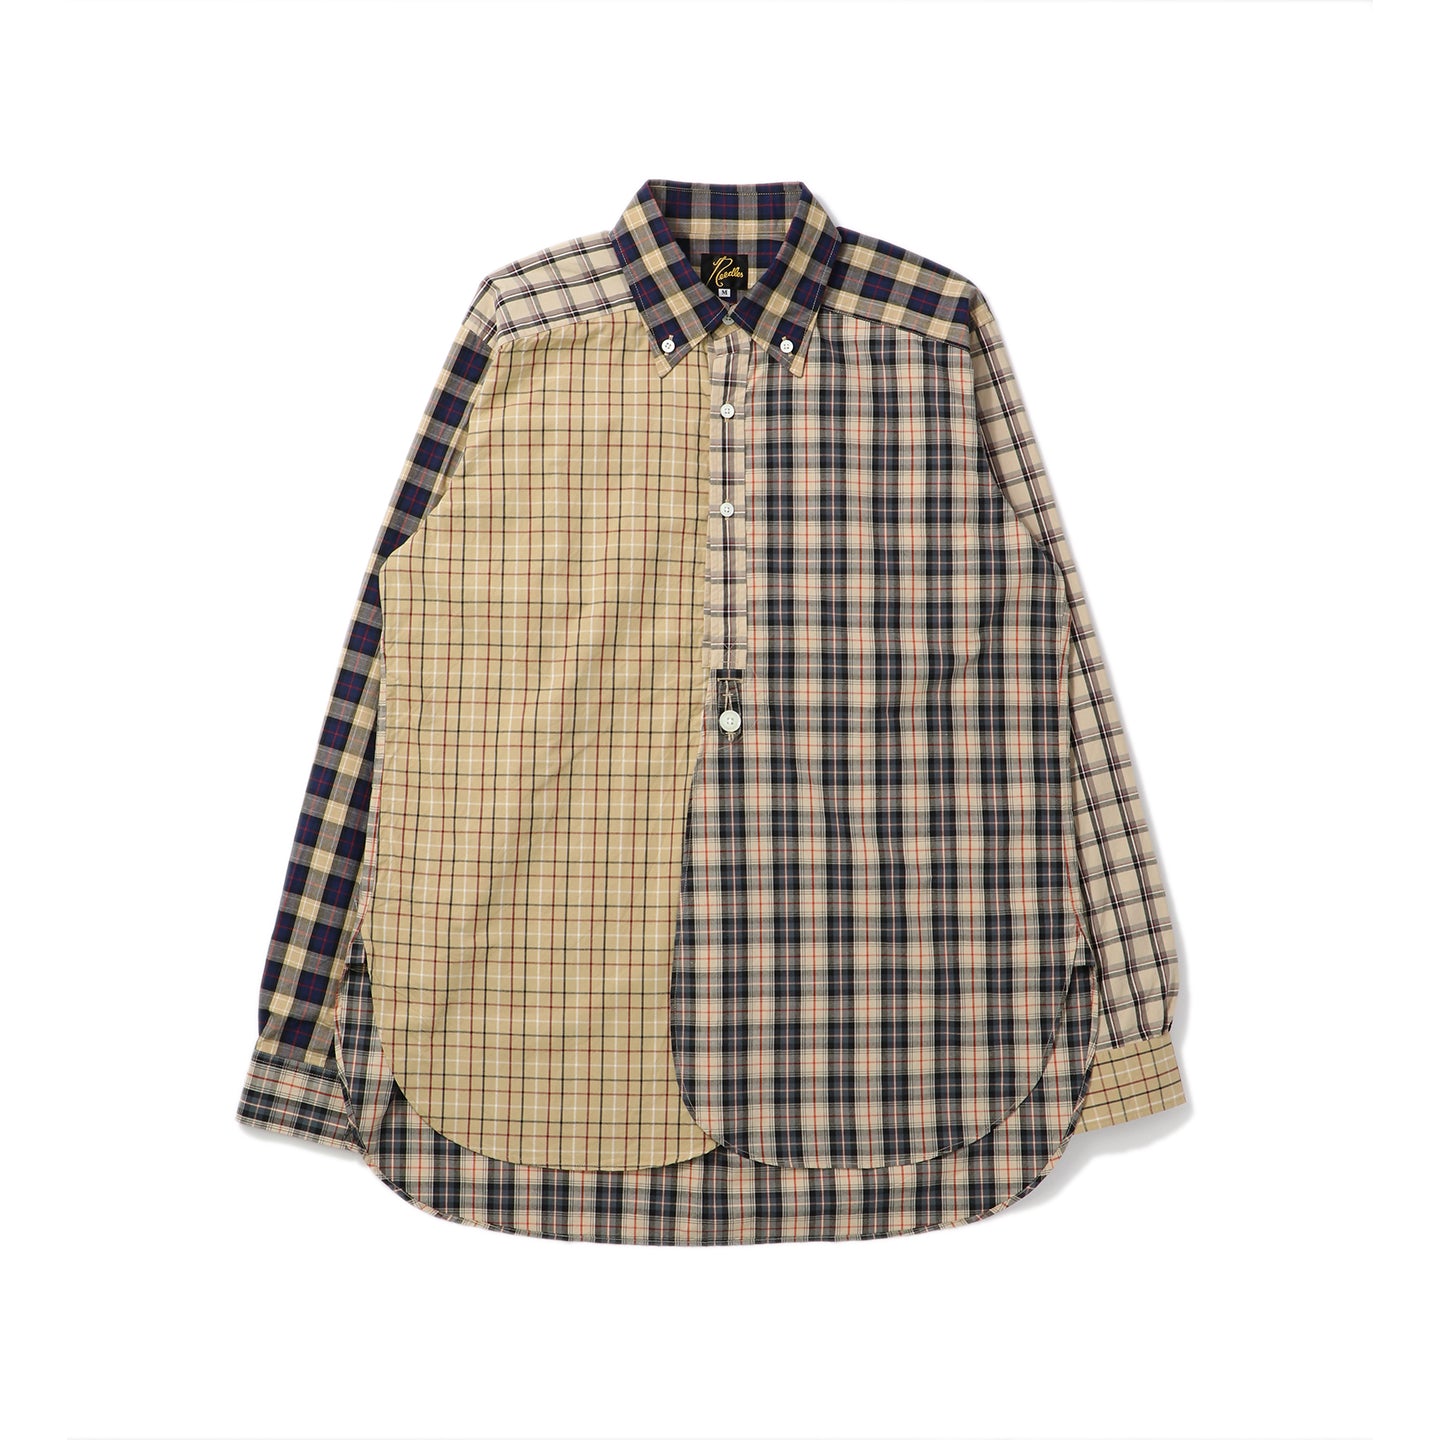 B.D. EDW Shirt - Cotton Plaid Cloth / Crazy